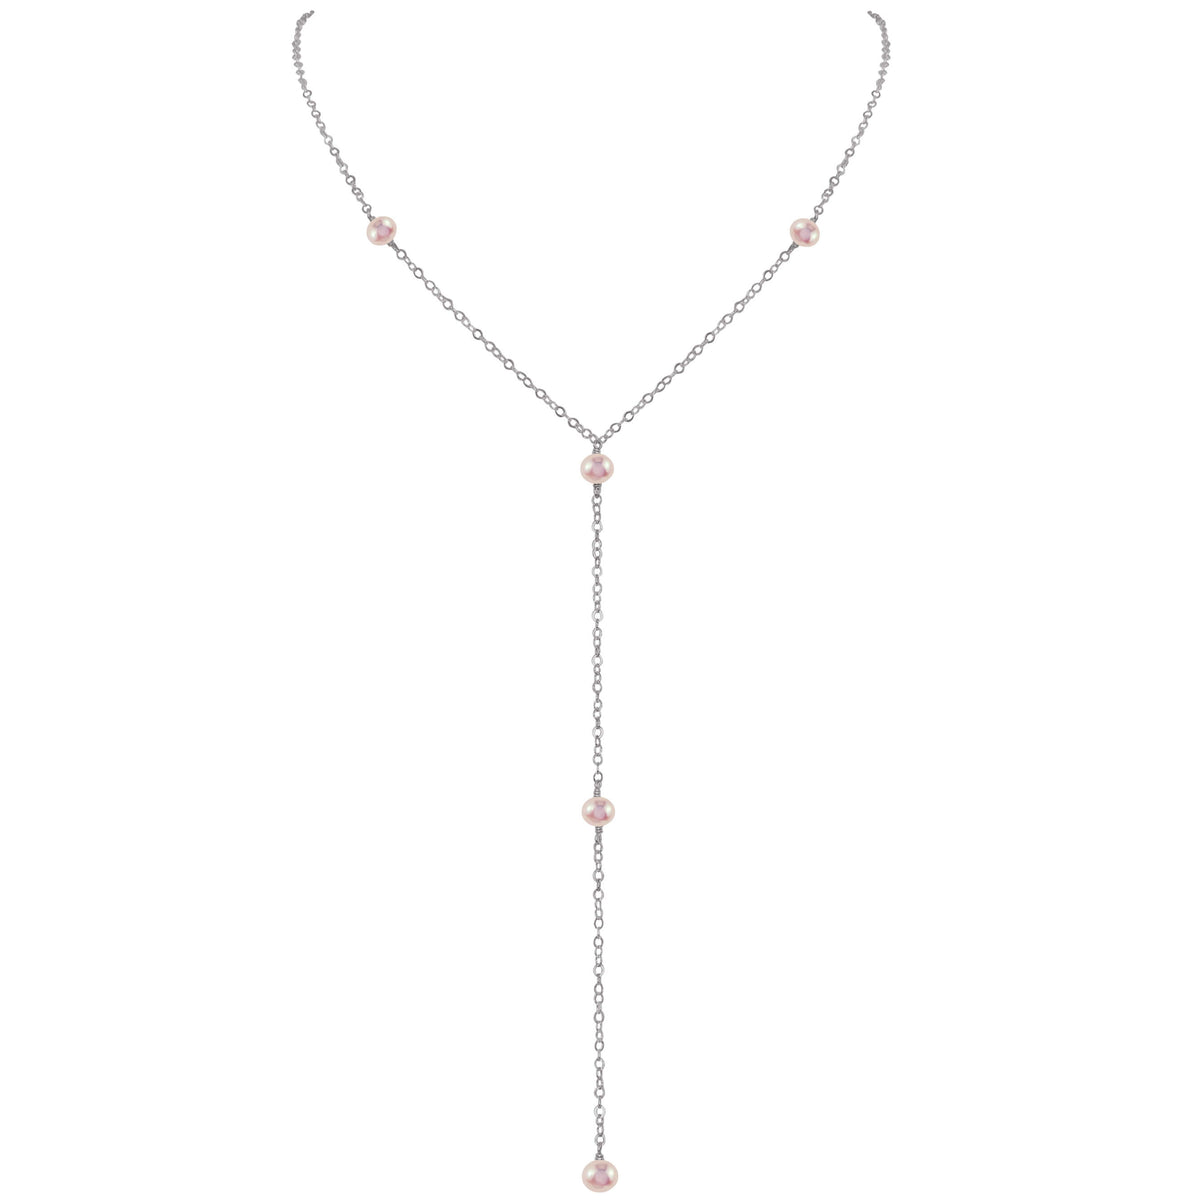 Dainty Y Necklace - Freshwater Pearl - Stainless Steel - Luna Tide Handmade Jewellery